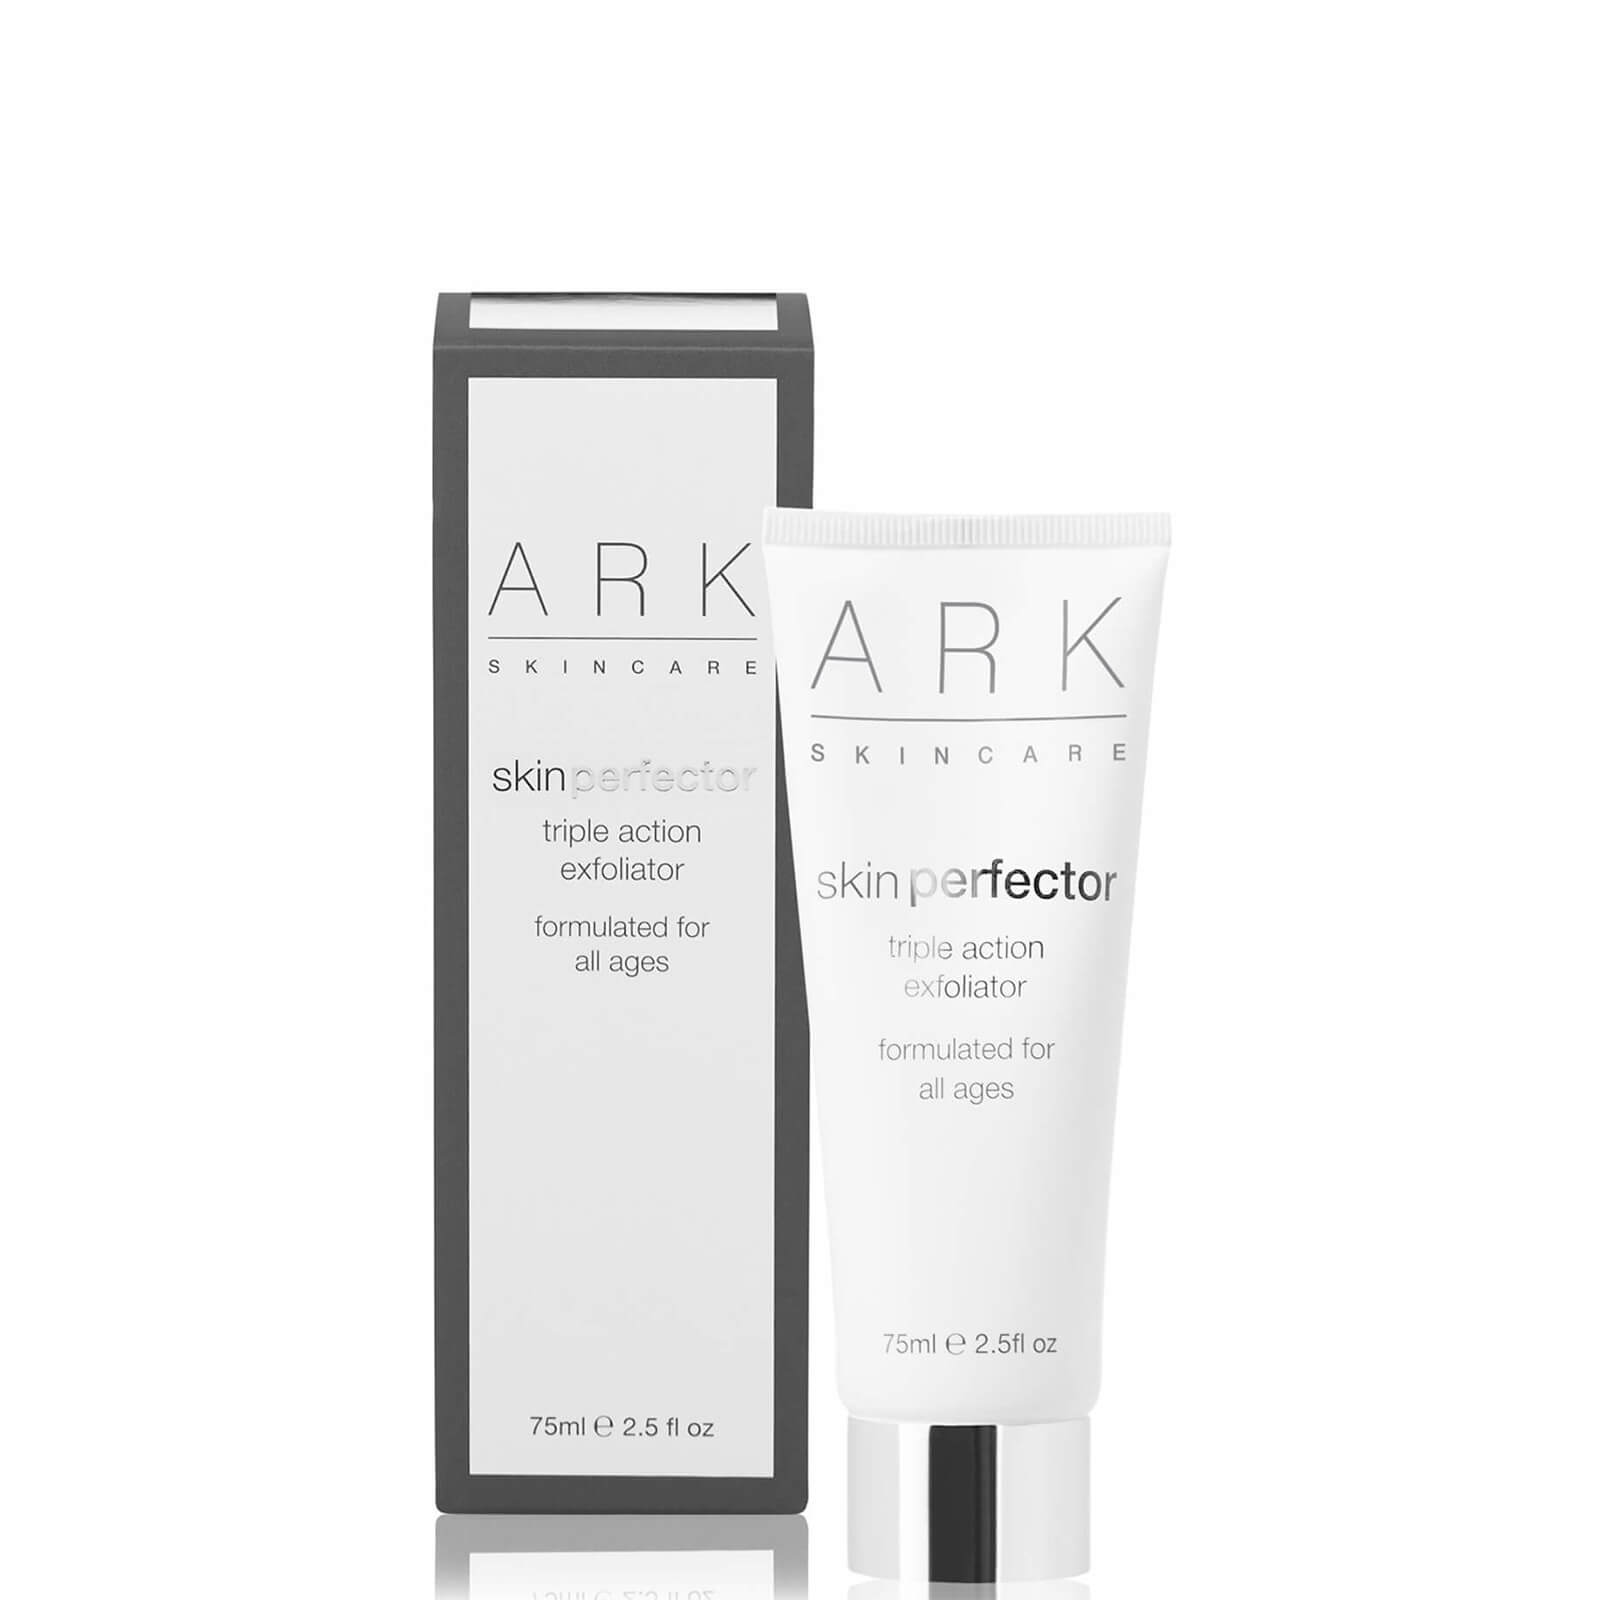 Ark Skincare ARK Triple Action Exfoliator 75ml